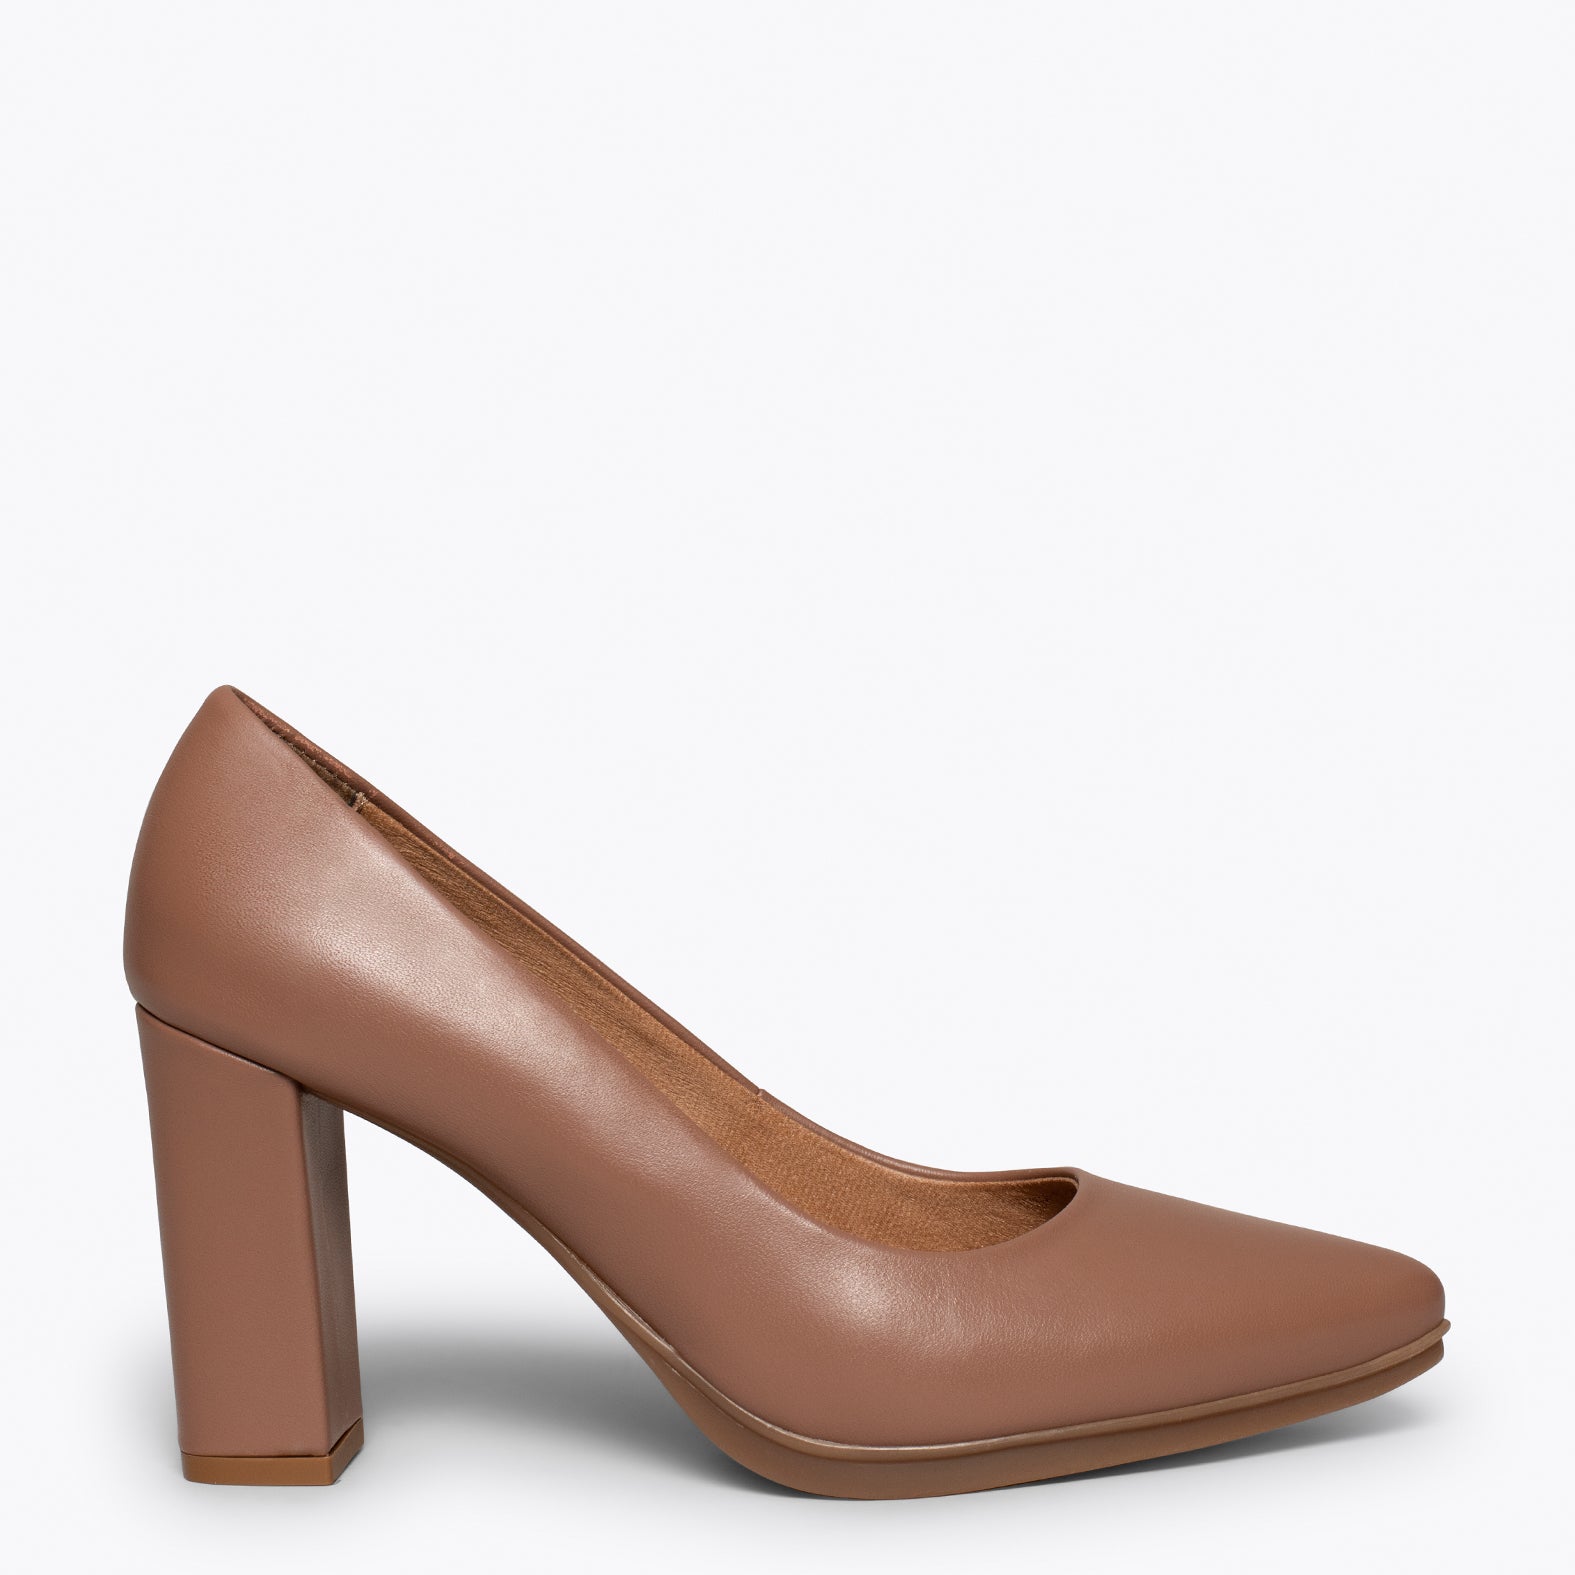 URBAN SALON – NUDE nappa leather high heel